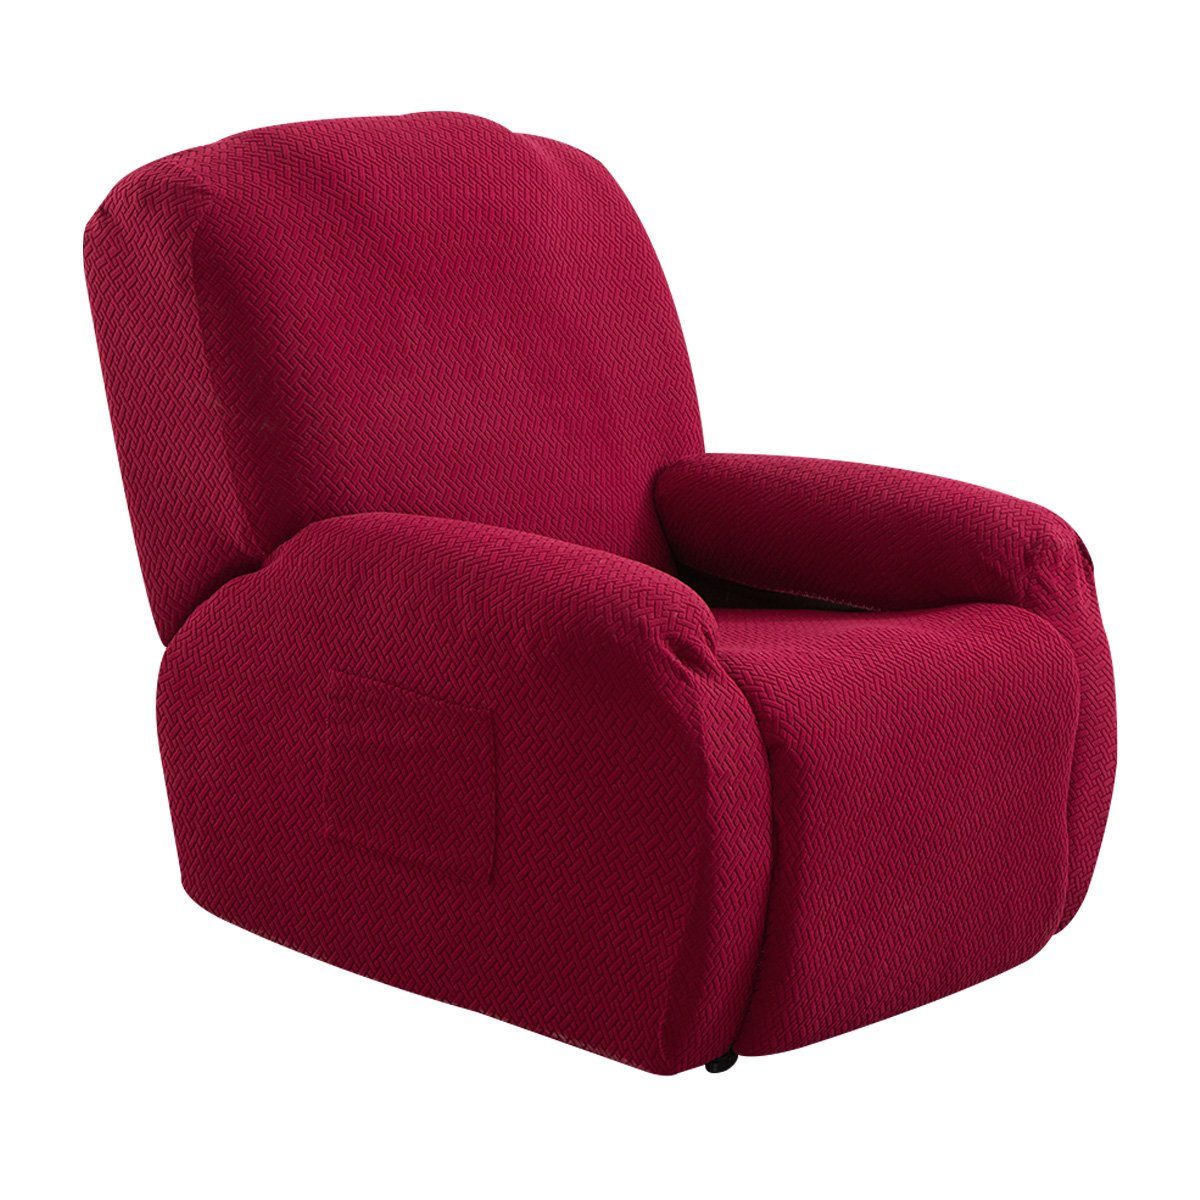 Sesselhusse Sesselbezug Stretchhusse, Relaxsessel Komplett für Liege Sessel, Rosnek, mit Strukturoptik Rot | Sesselhussen